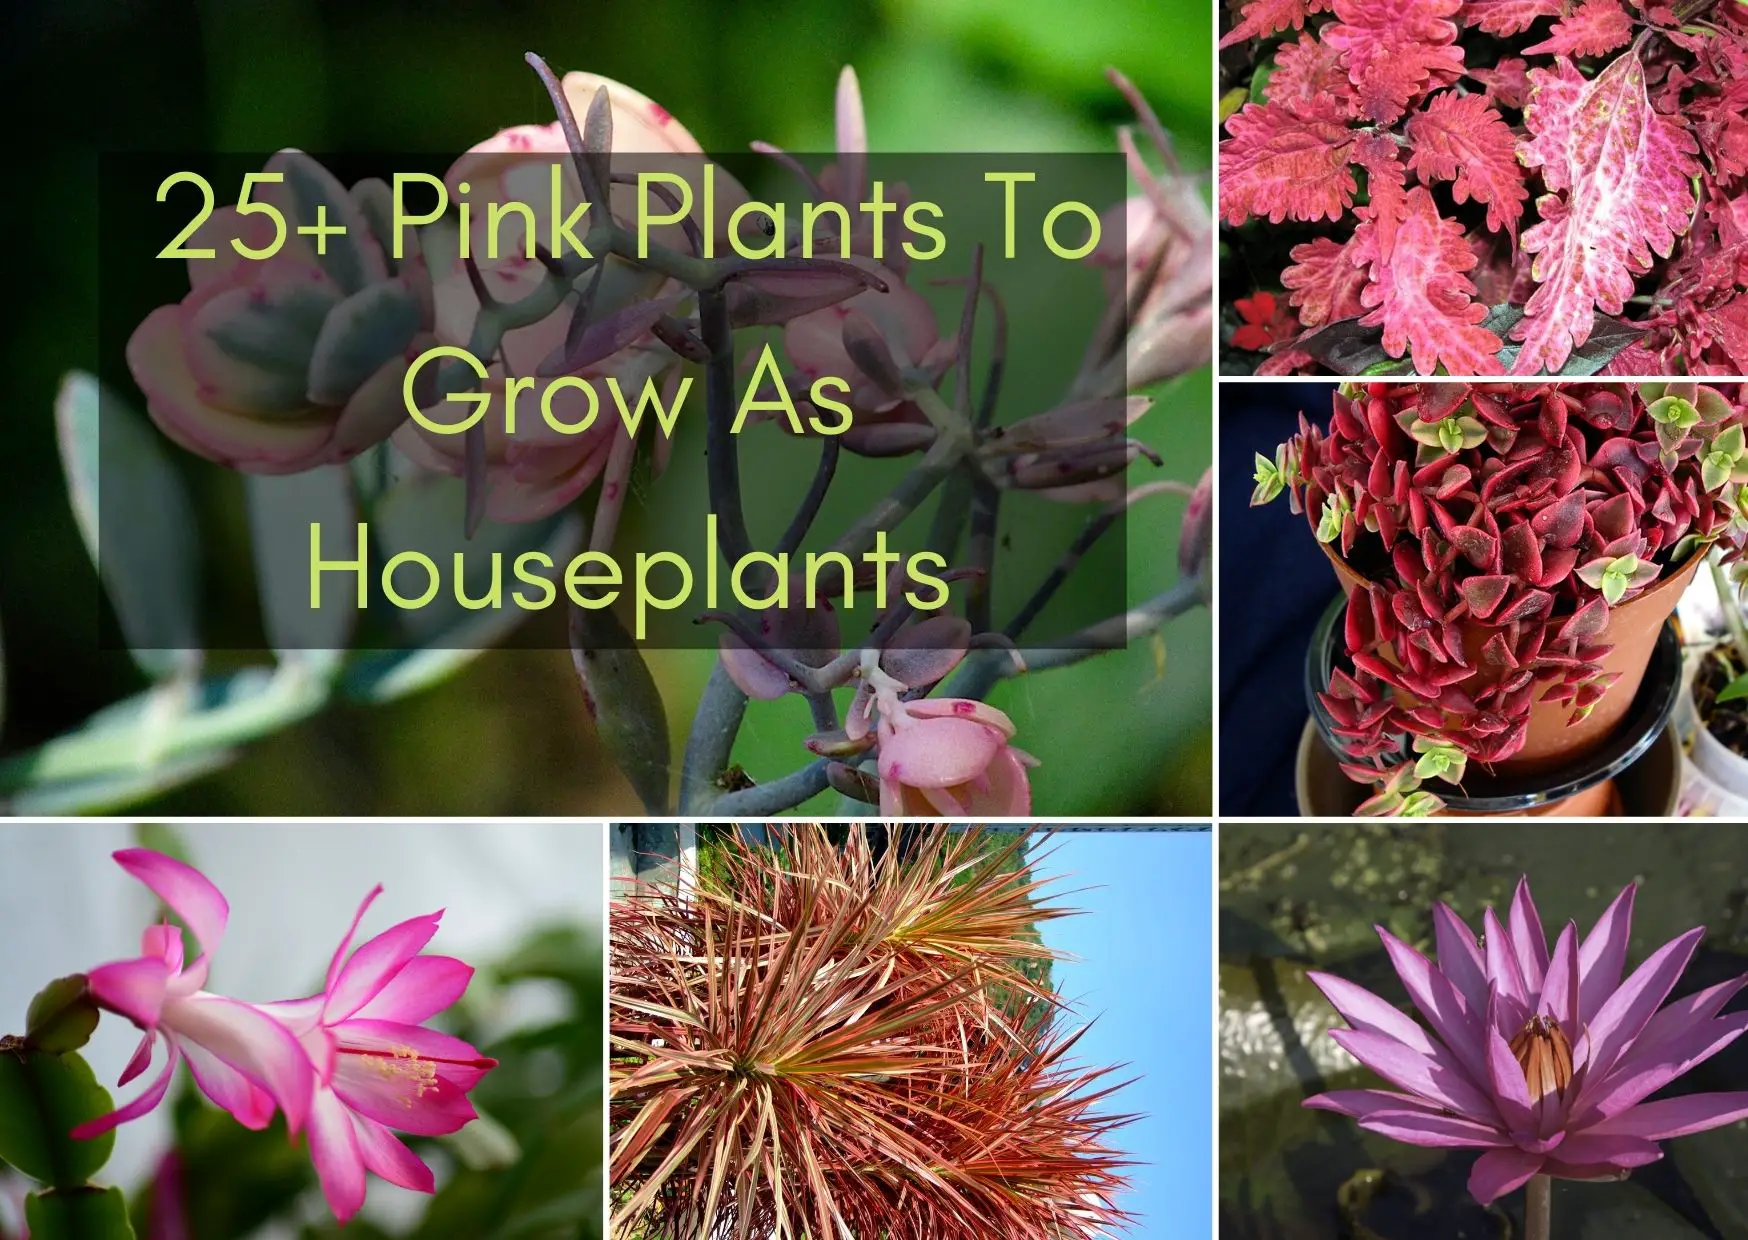 Pink Plants To Grow As Houseplants